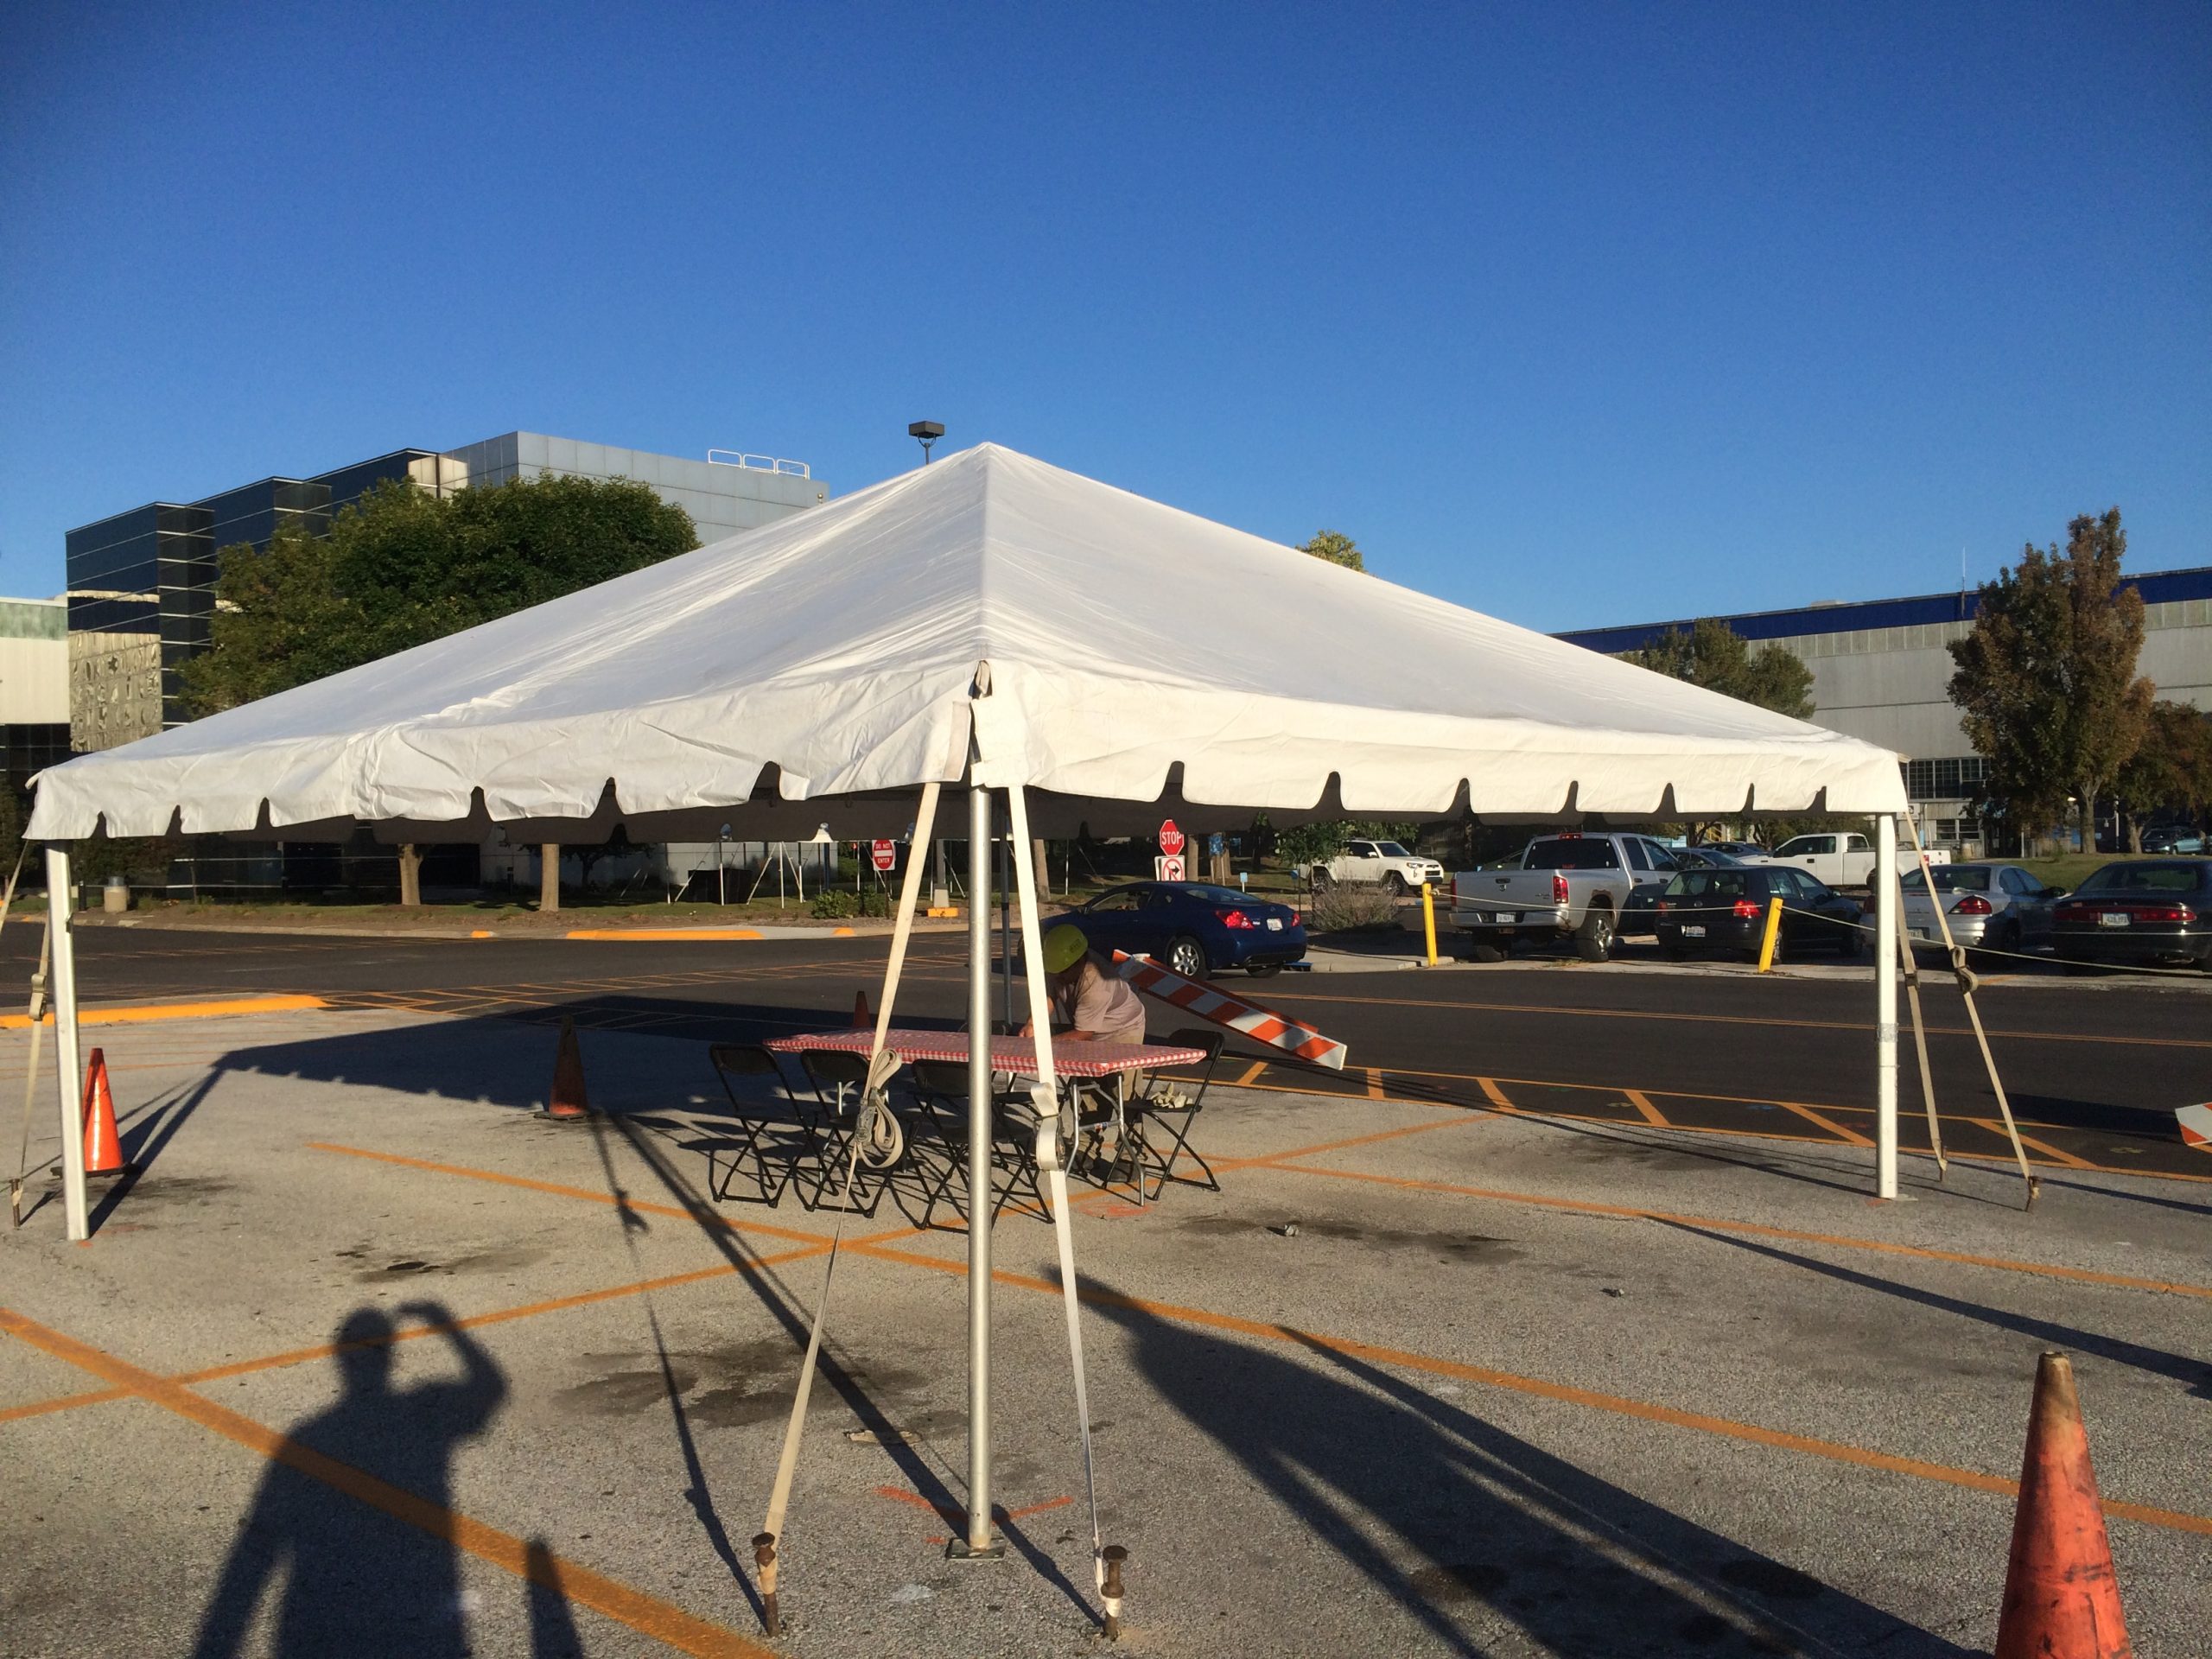 20′ x 20′ frame tent at Alcoa in Bettendorf, Iowa